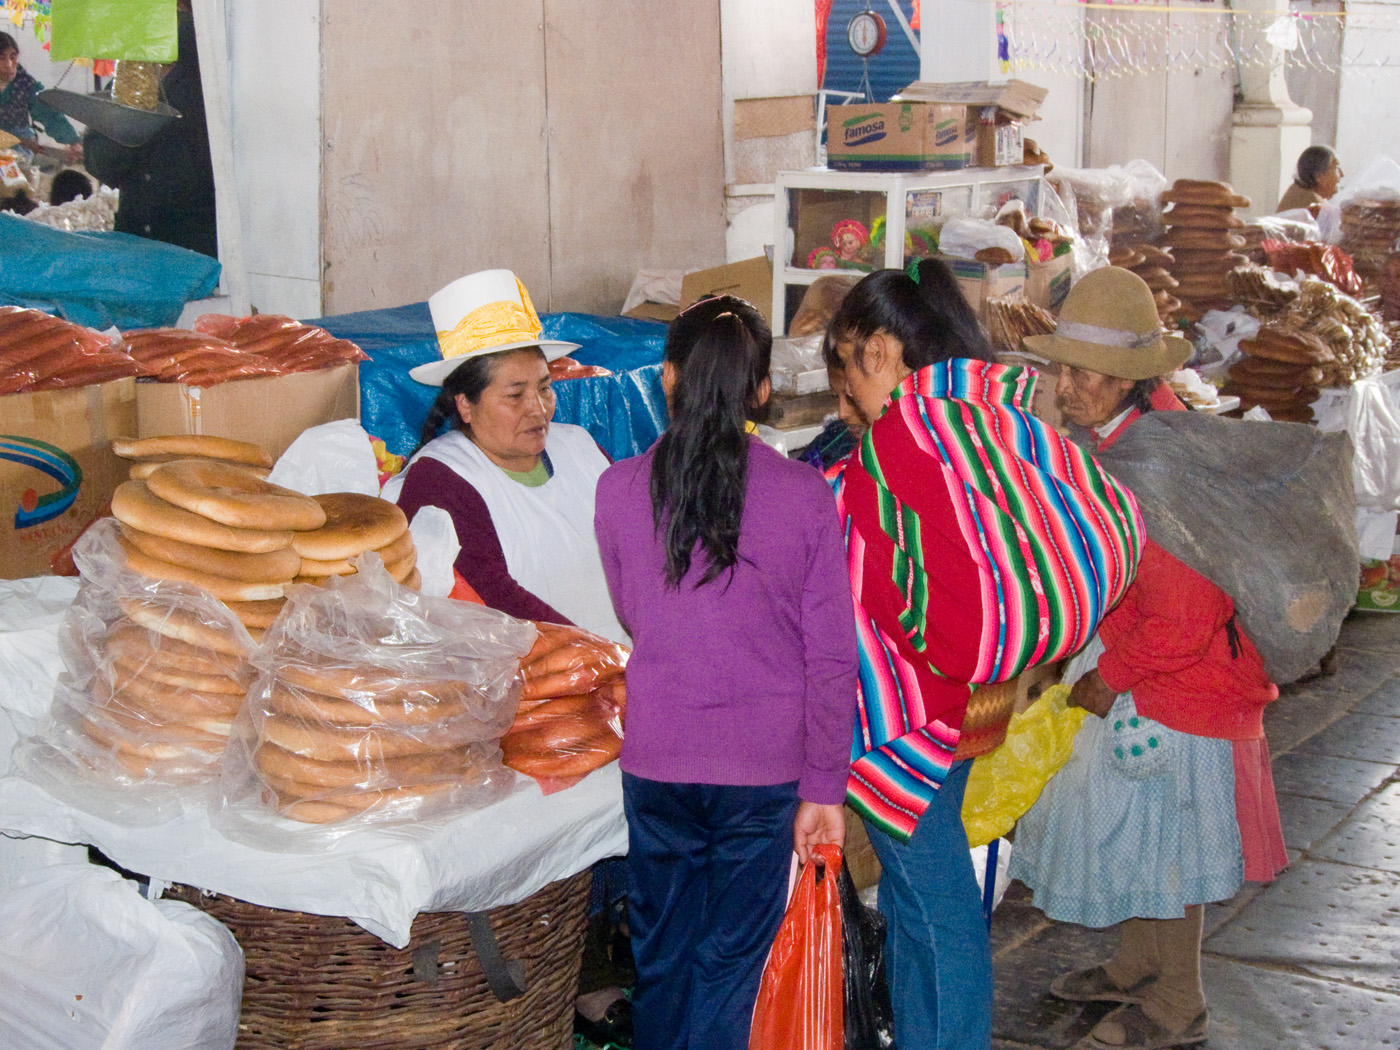 Central Market, Cusco